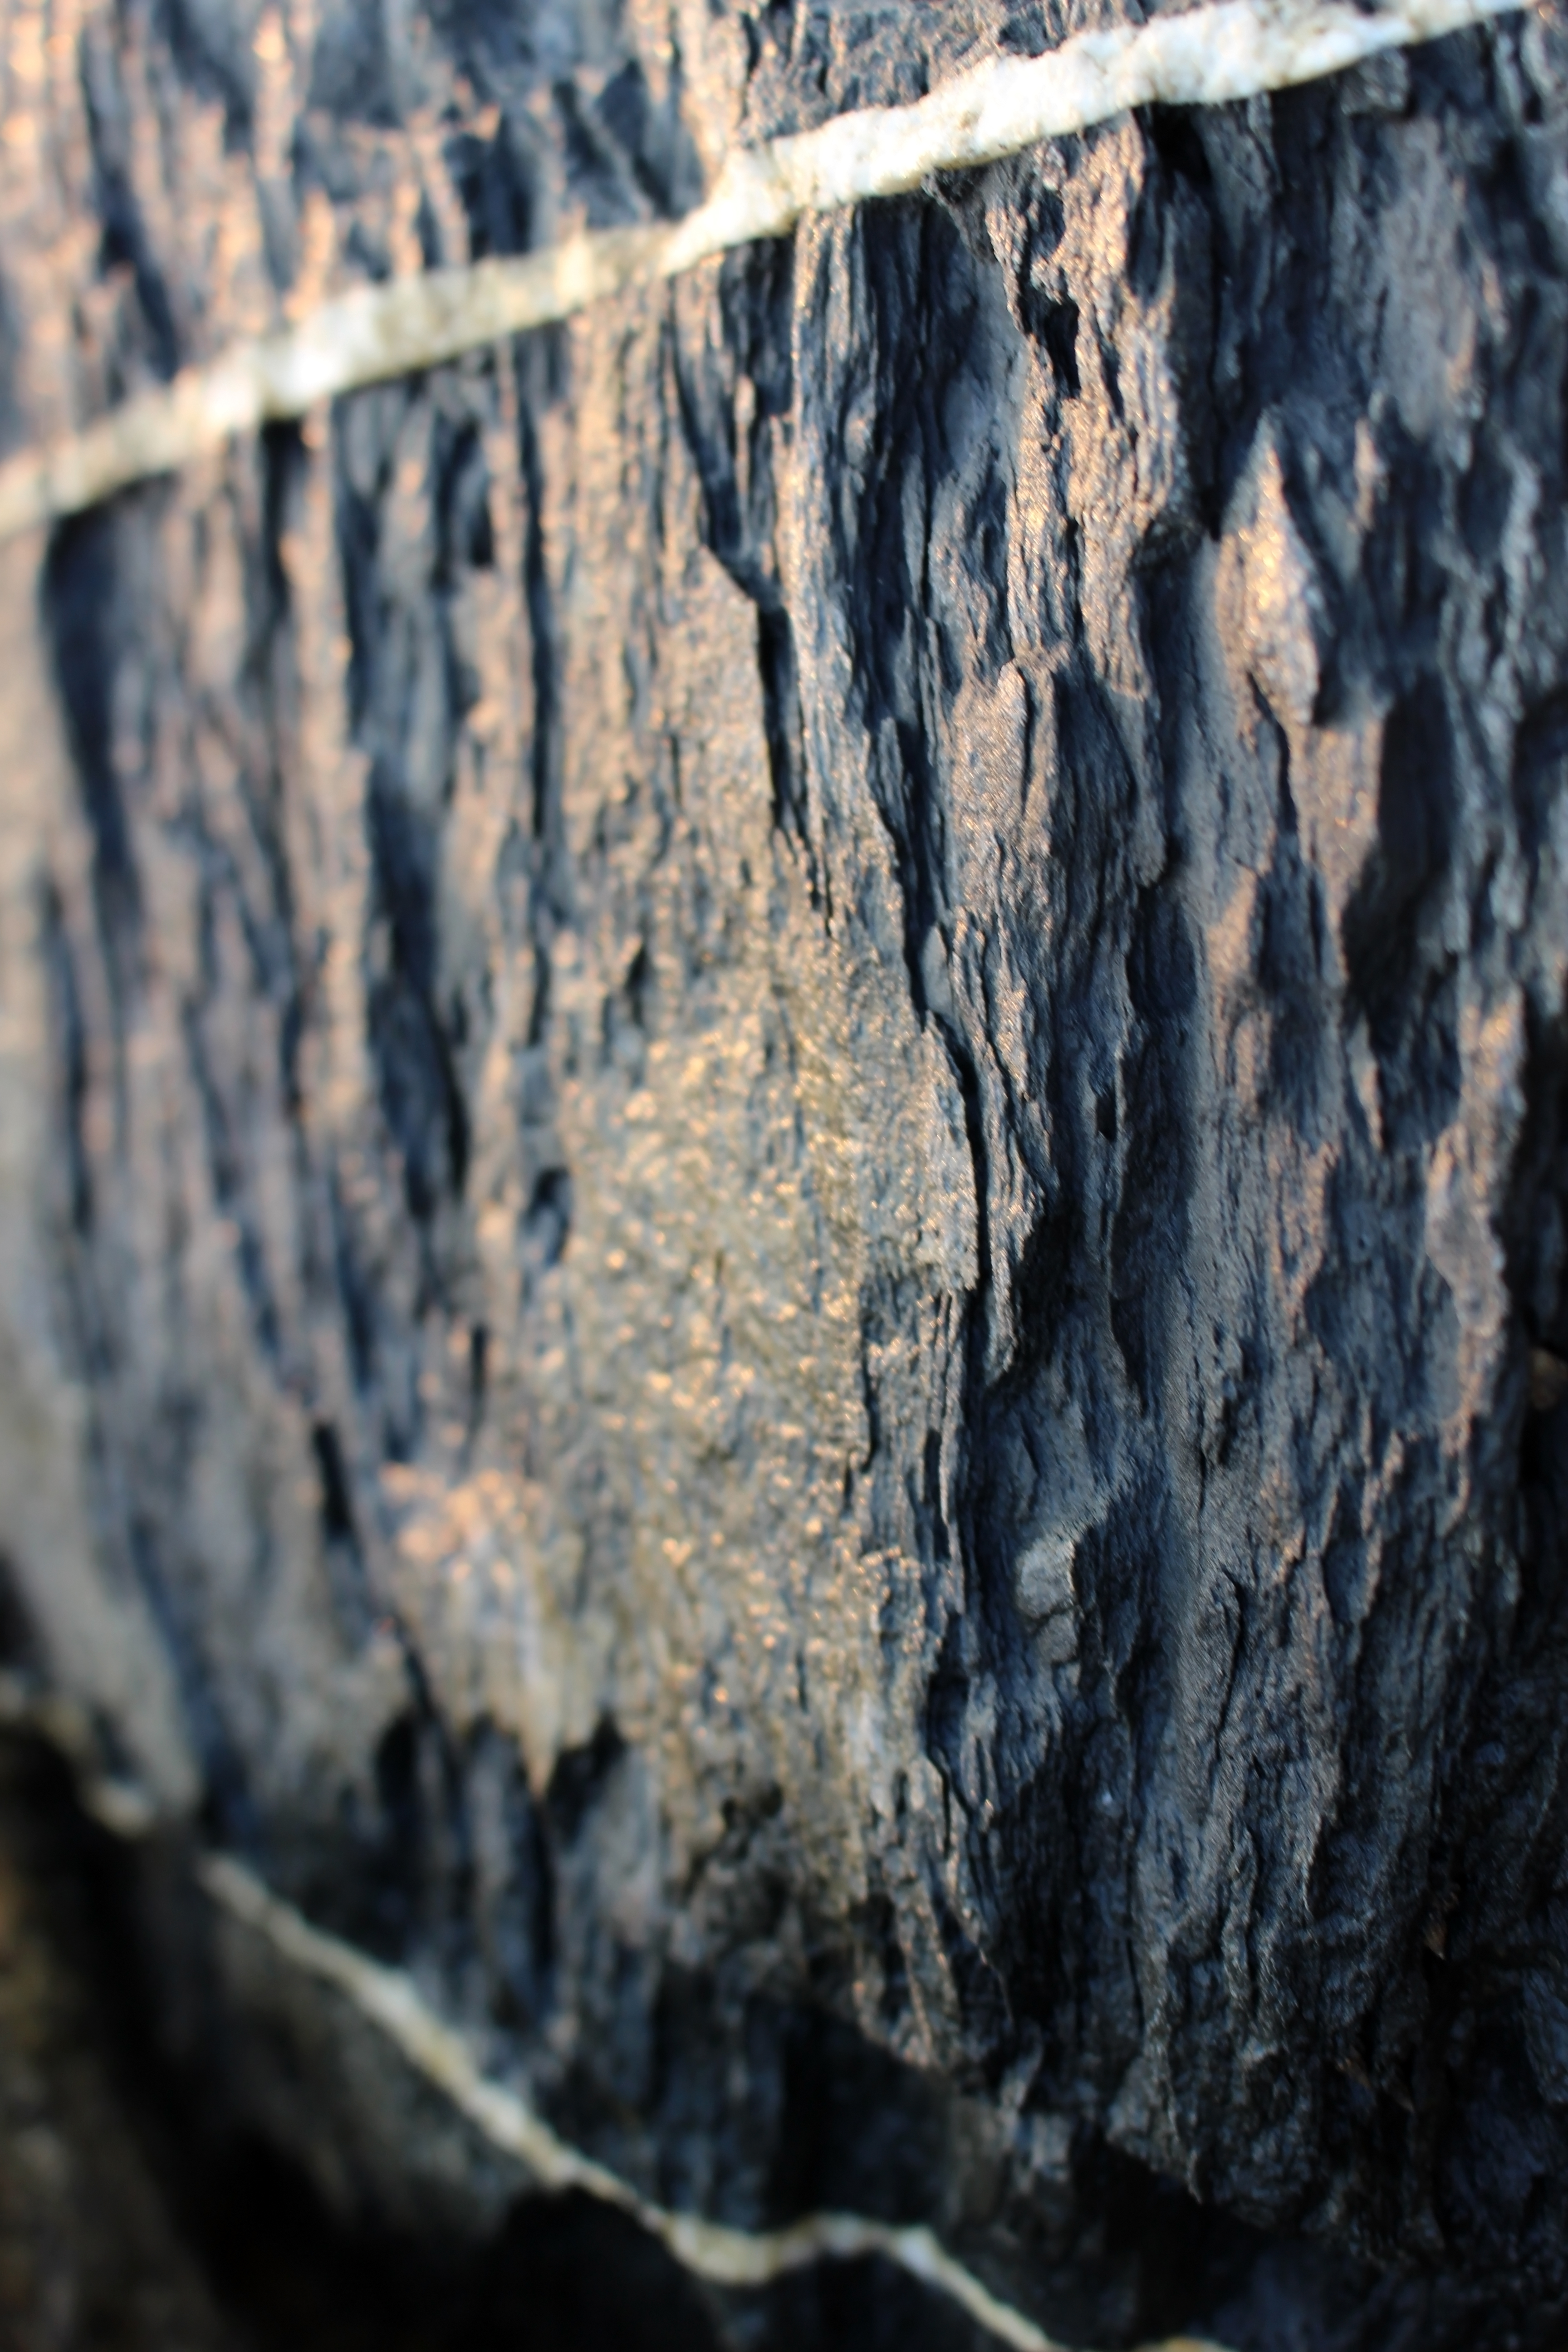 Black rock texture with white veins photo